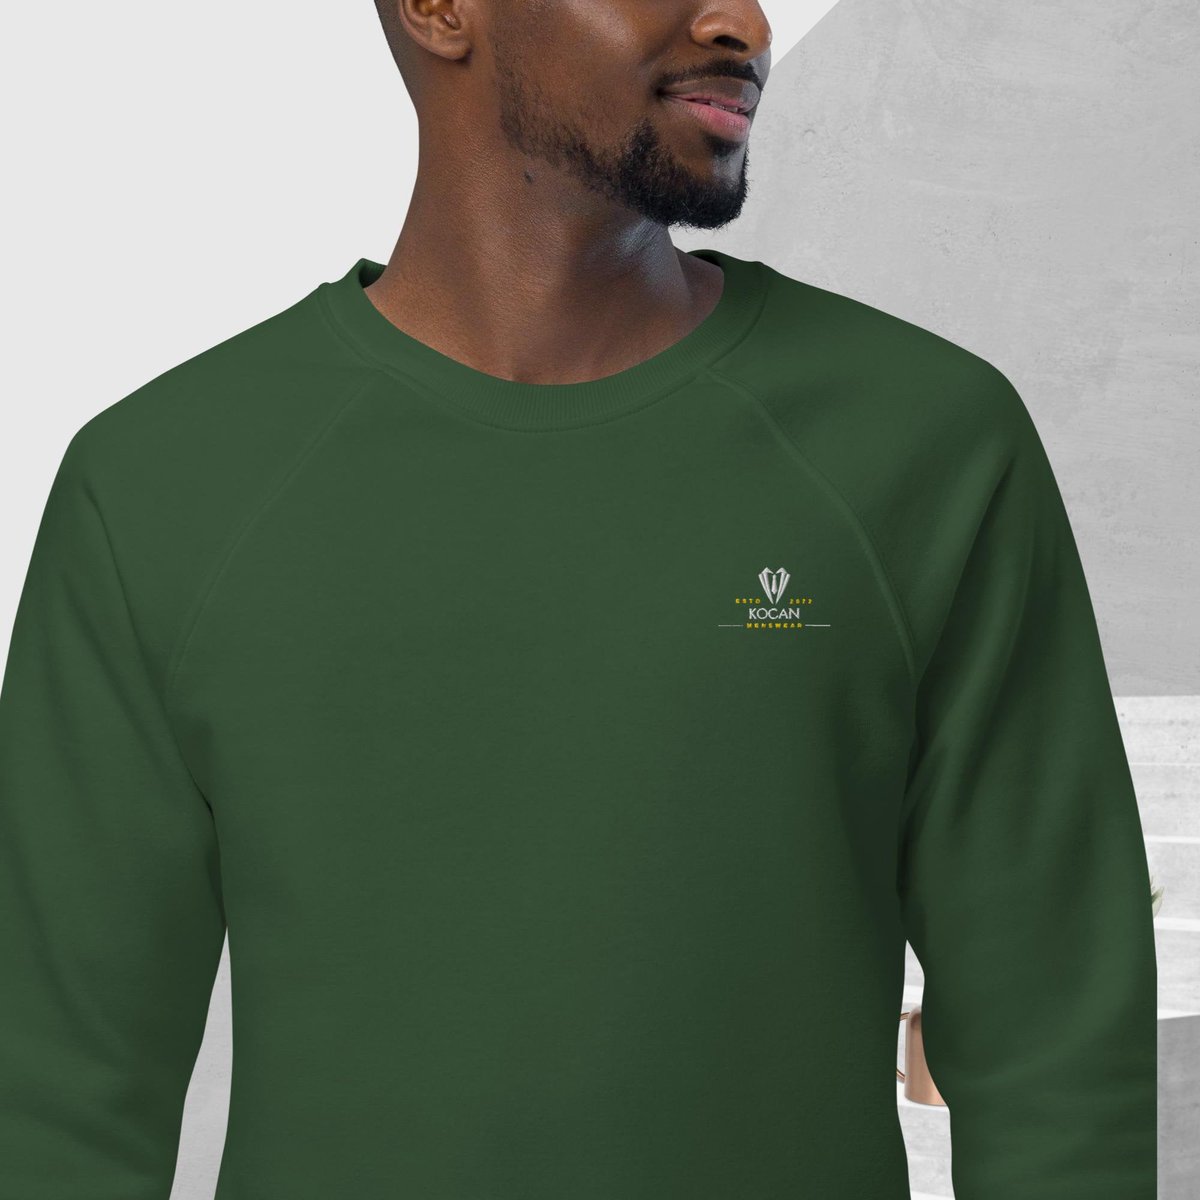 Excited to share the latest addition to my #etsy shop: Unisex organic raglan sweatshirt for men Father's day present for men sweatshirt long sleeve menswear etsy.me/3CgWutL #musthave #customshirt #menshirt #menstreetwear #boyfriendshirt #shirtmale #menswearshir